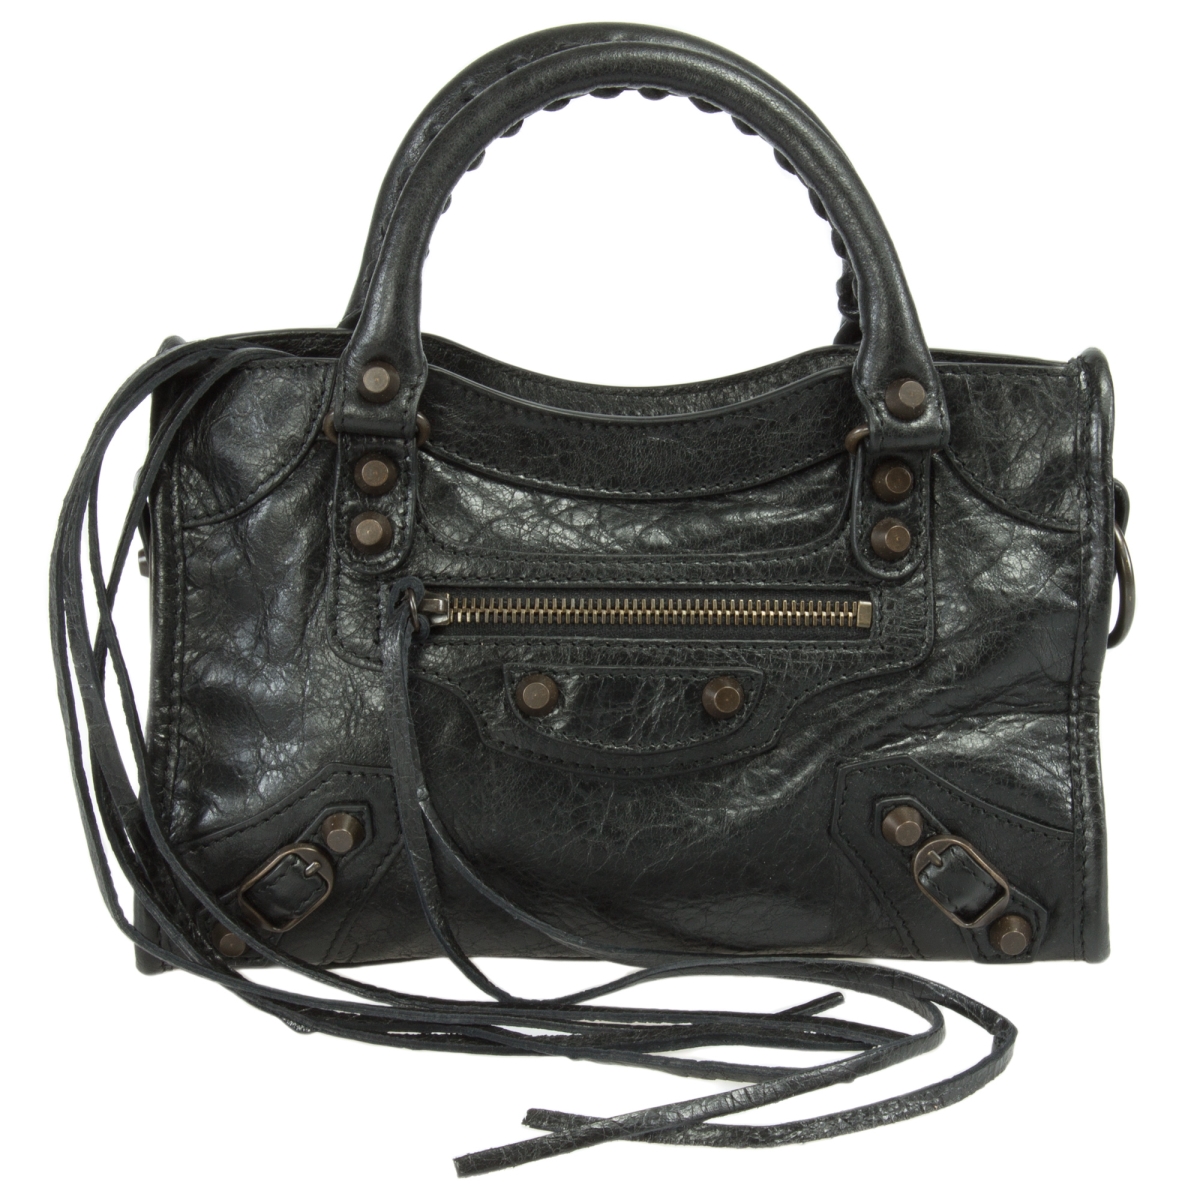 Bal-hbag-city-clsc-mini-blk Classic Mini City Leather Bag, Black